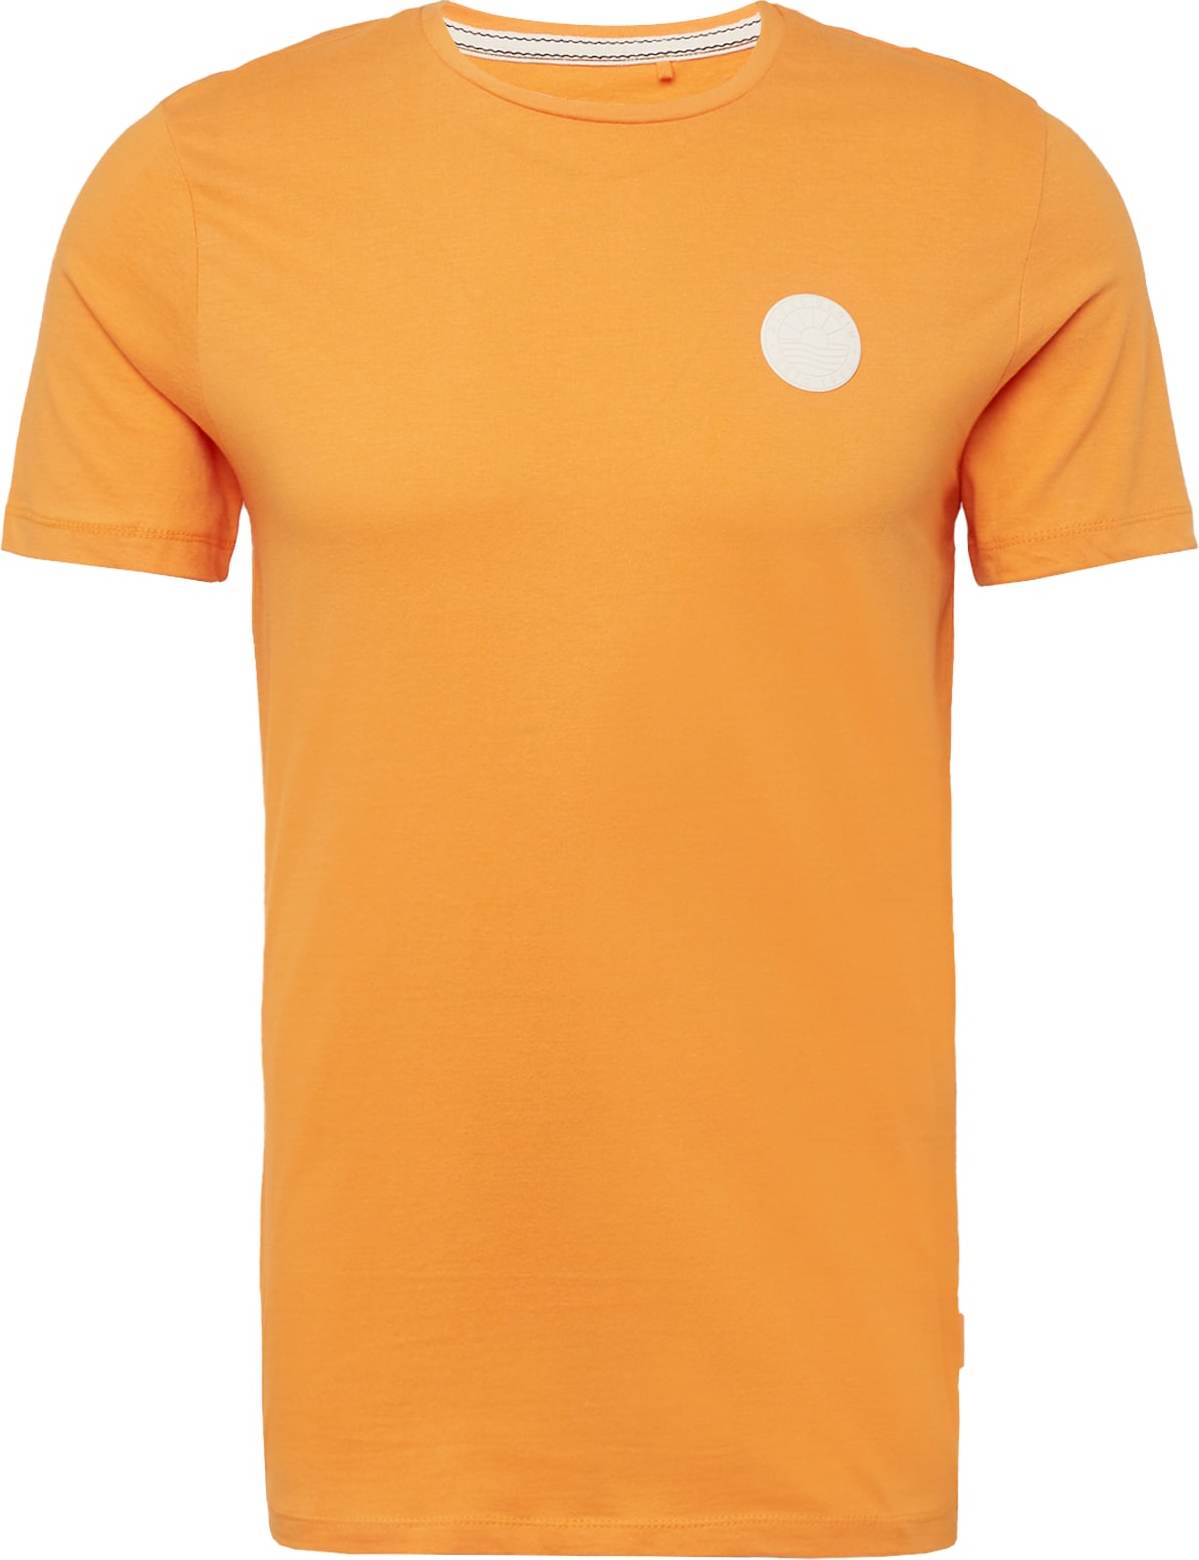 BLEND Tričko oranžová / bílá